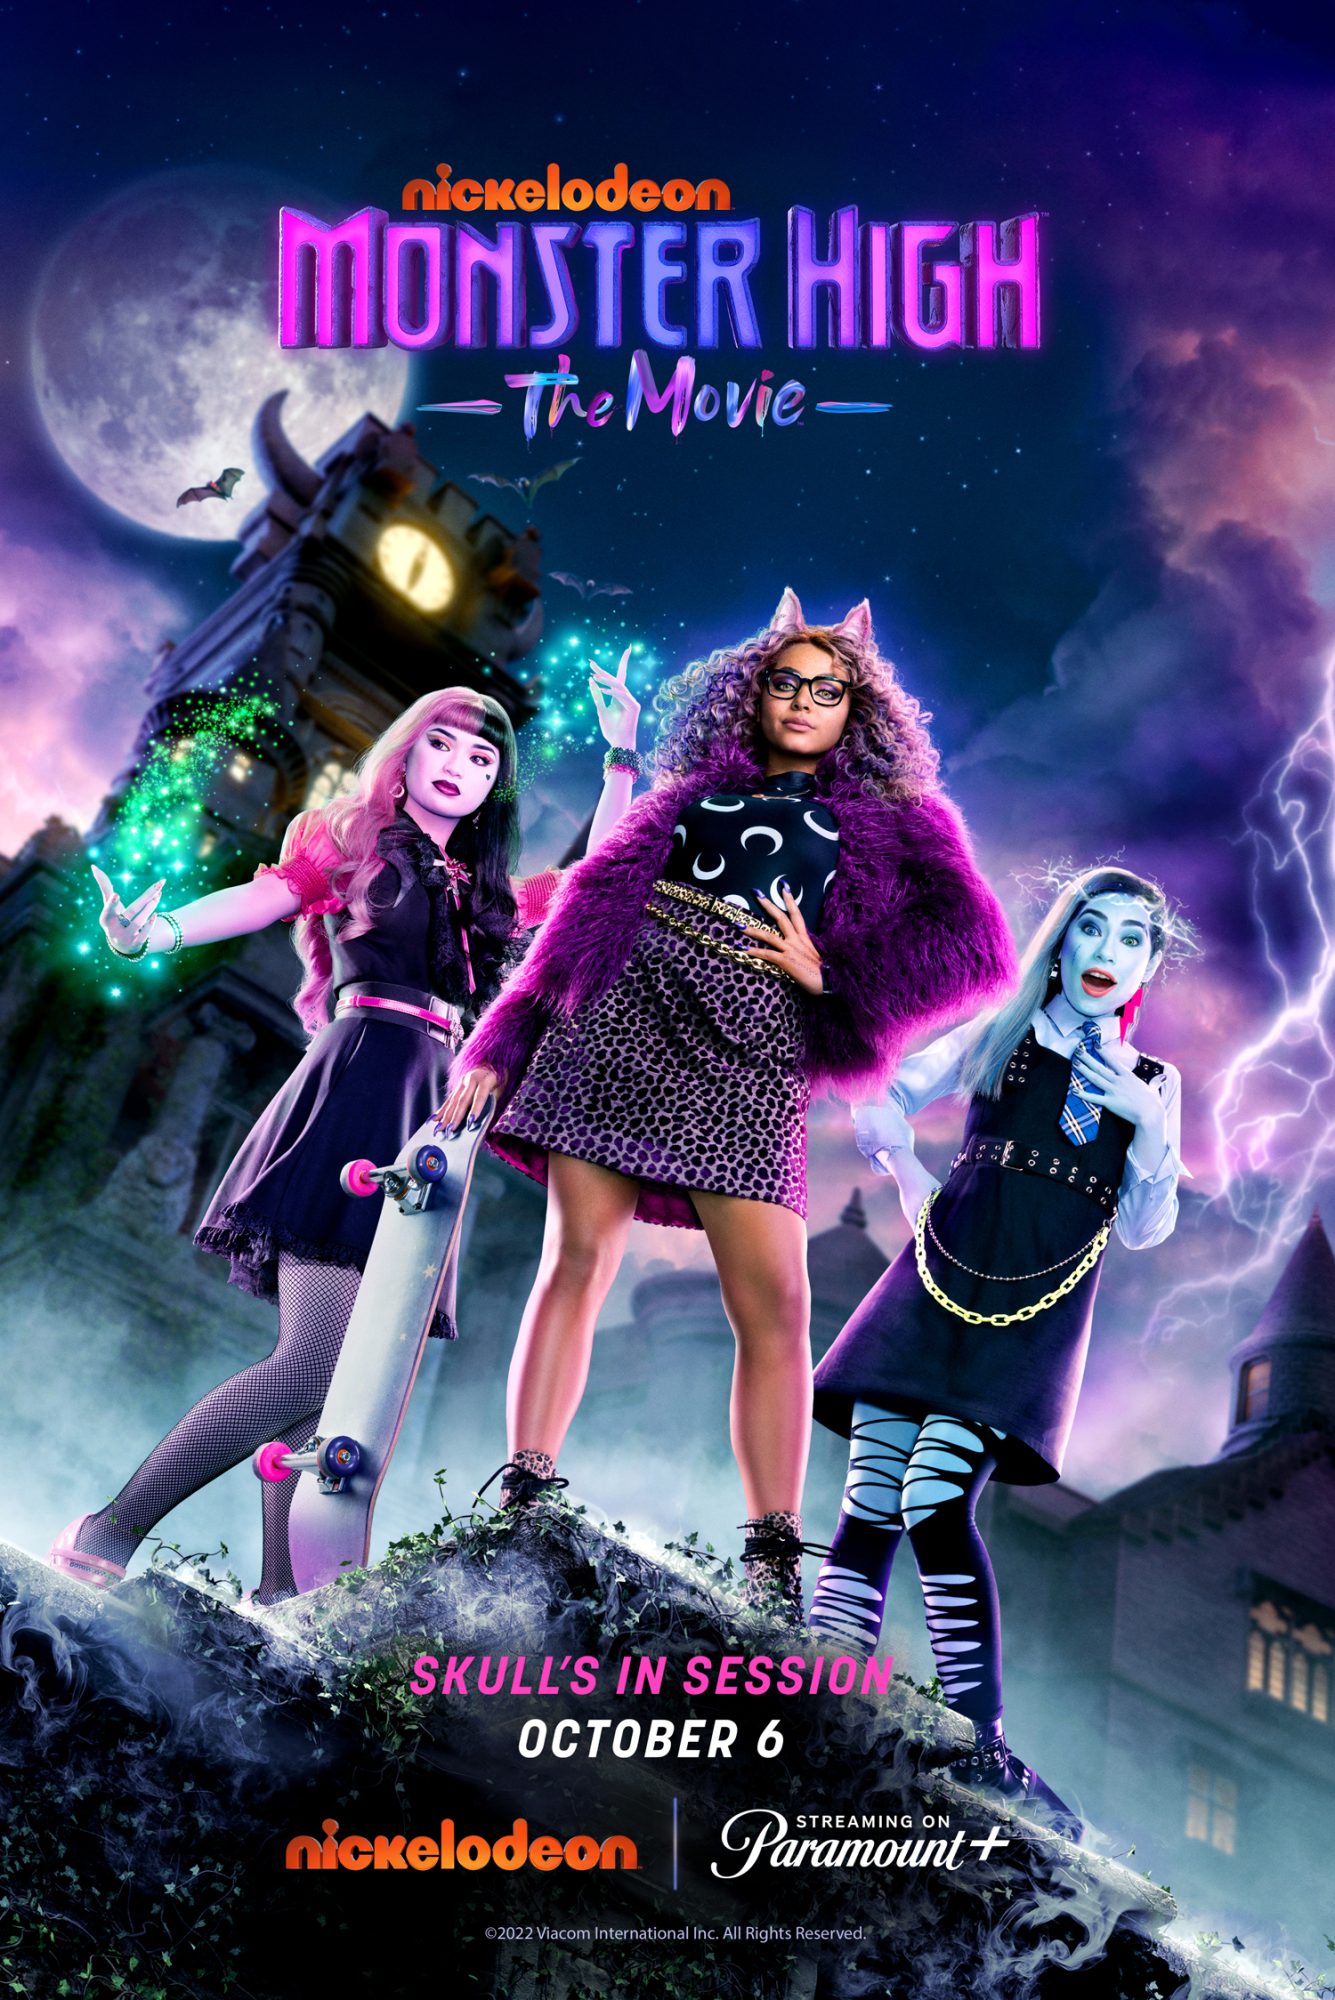 Monster High: The Movie Show – ¡Las muñecas vuelven a la vida esta temporada de Halloween!